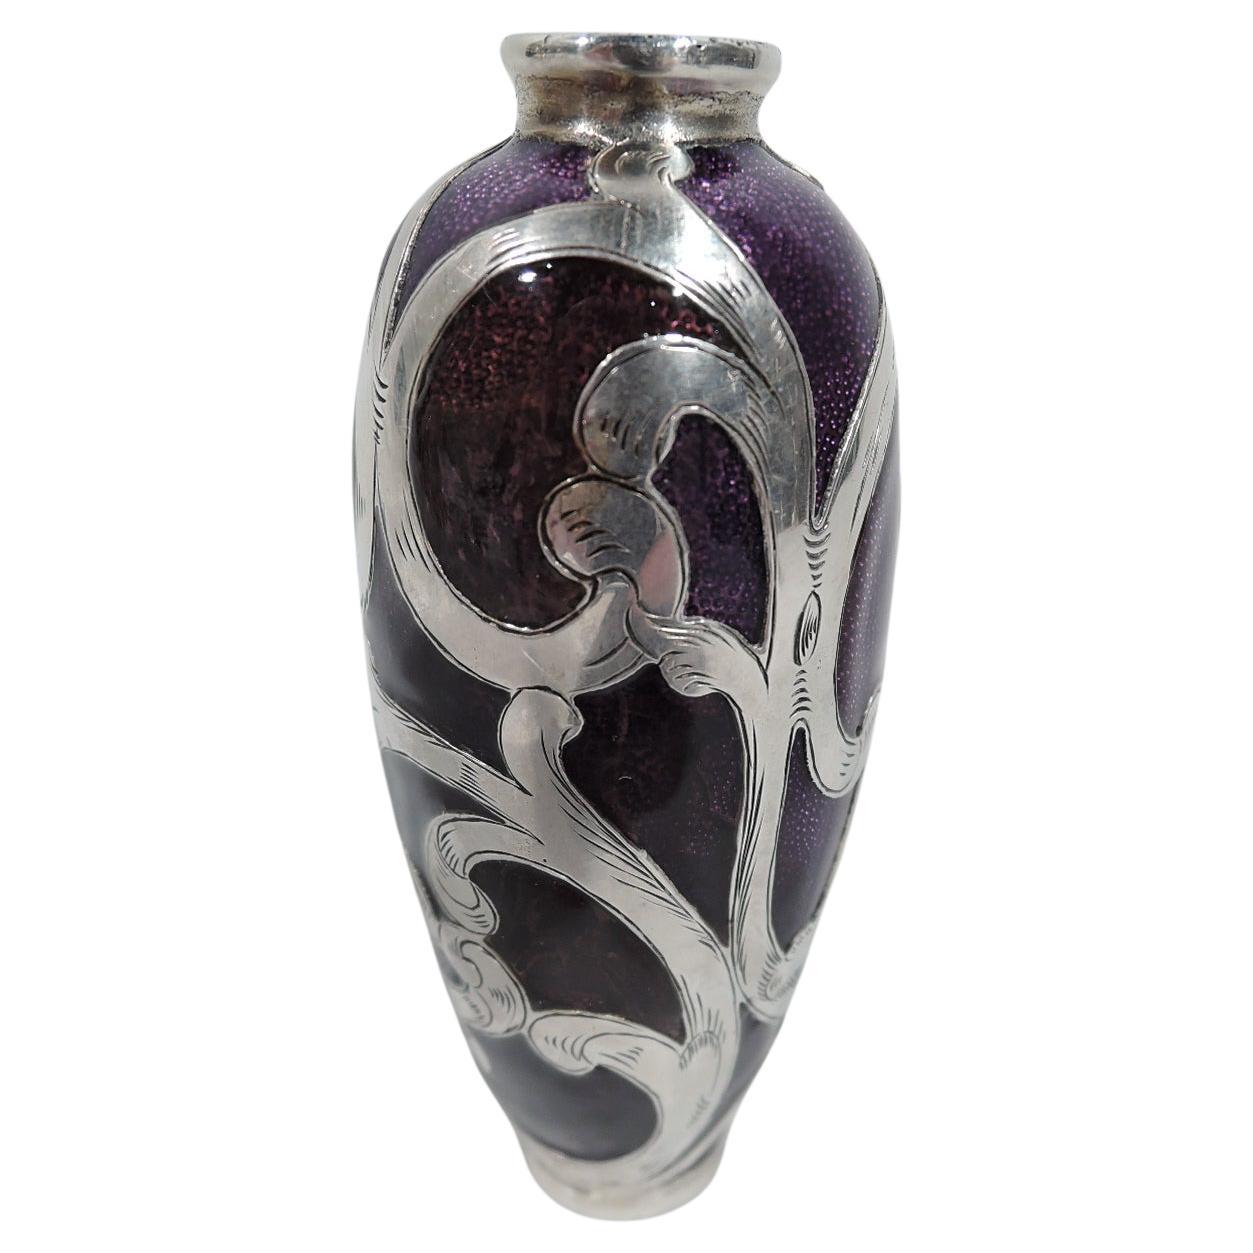 Antique American Art Nouveau Purple Enamel Silver Overlay Bud Vase